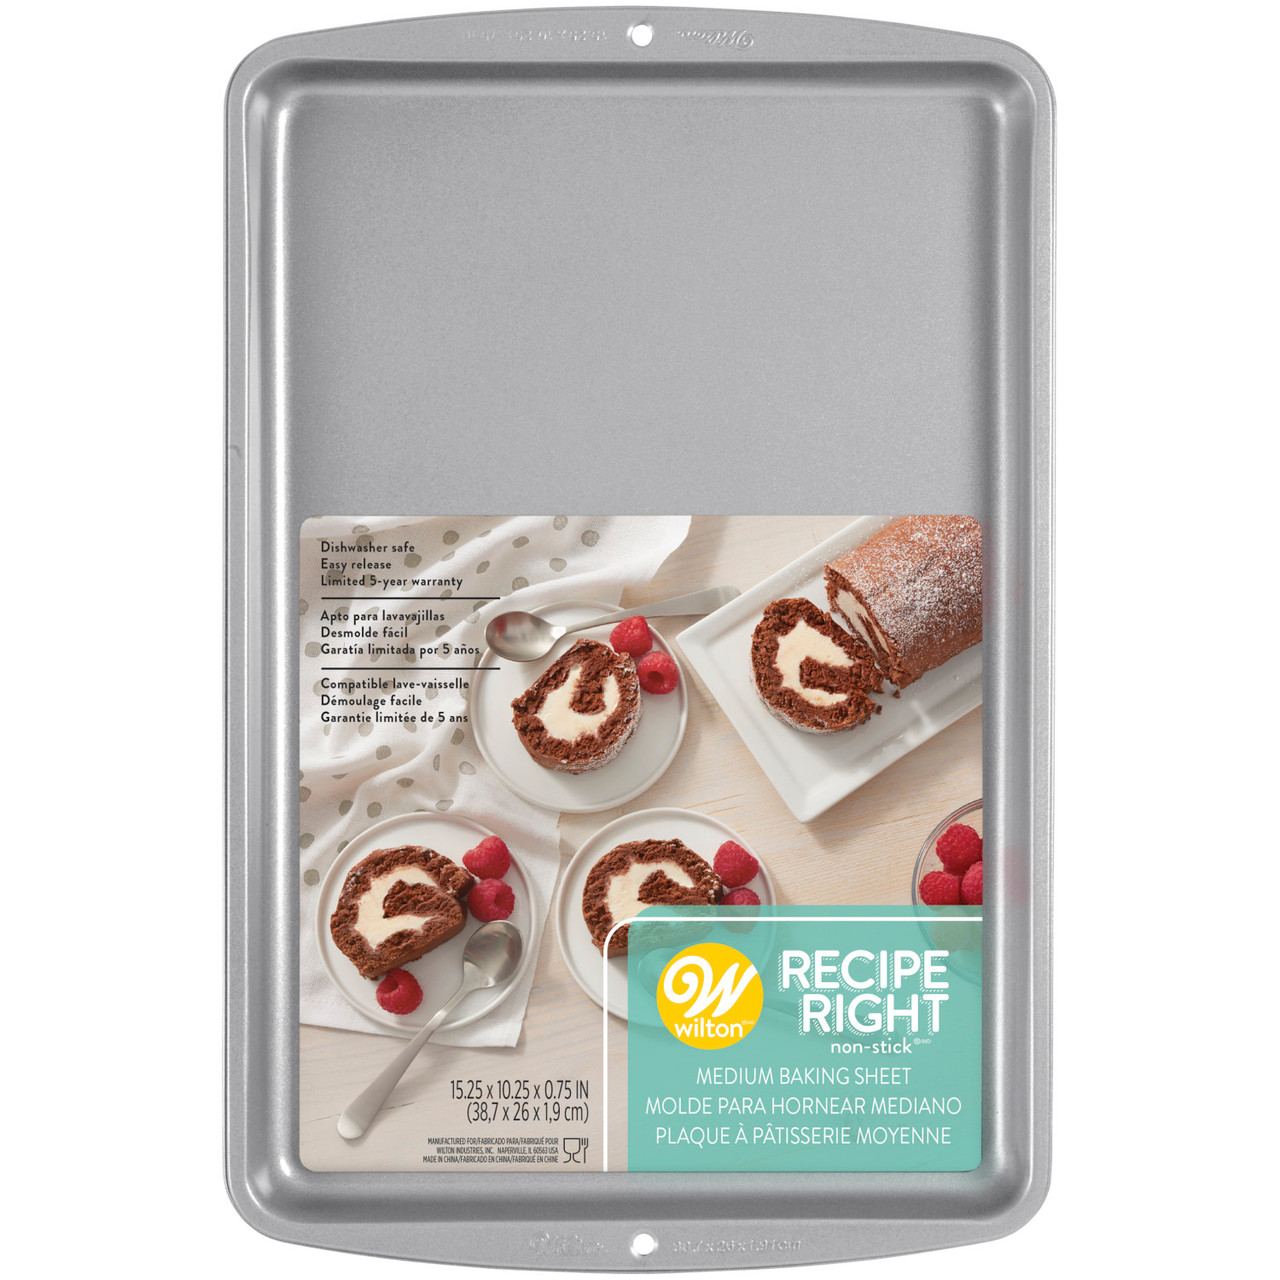 Wilton Ultra Bake Pro 2pc 7x10 Cookie Sheet Set